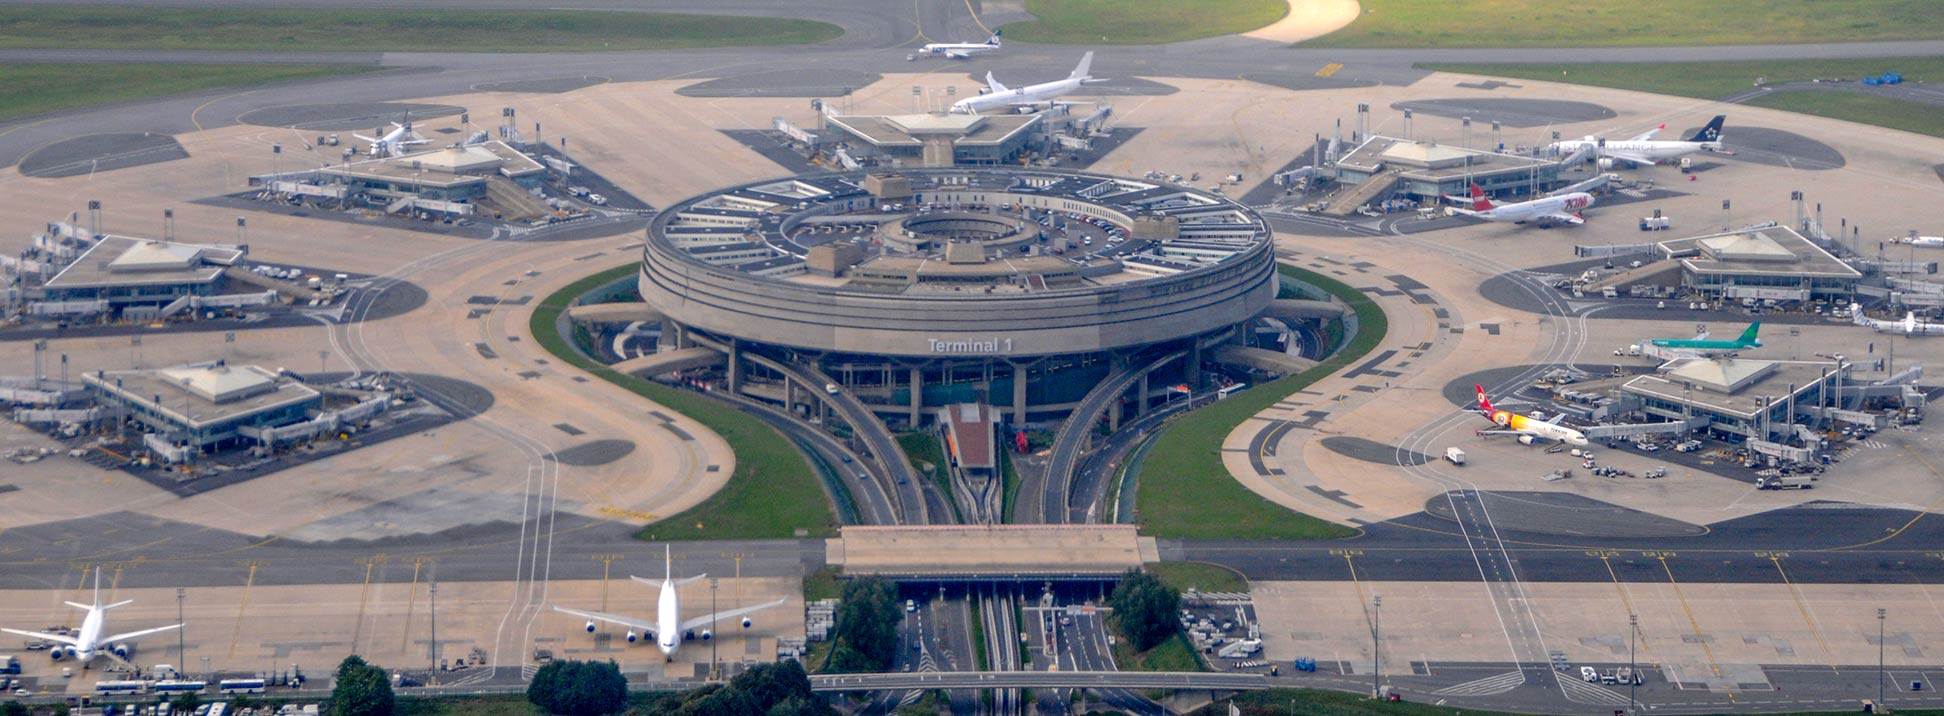 Charles de Gaulle Airport (CDG) in Paris, France